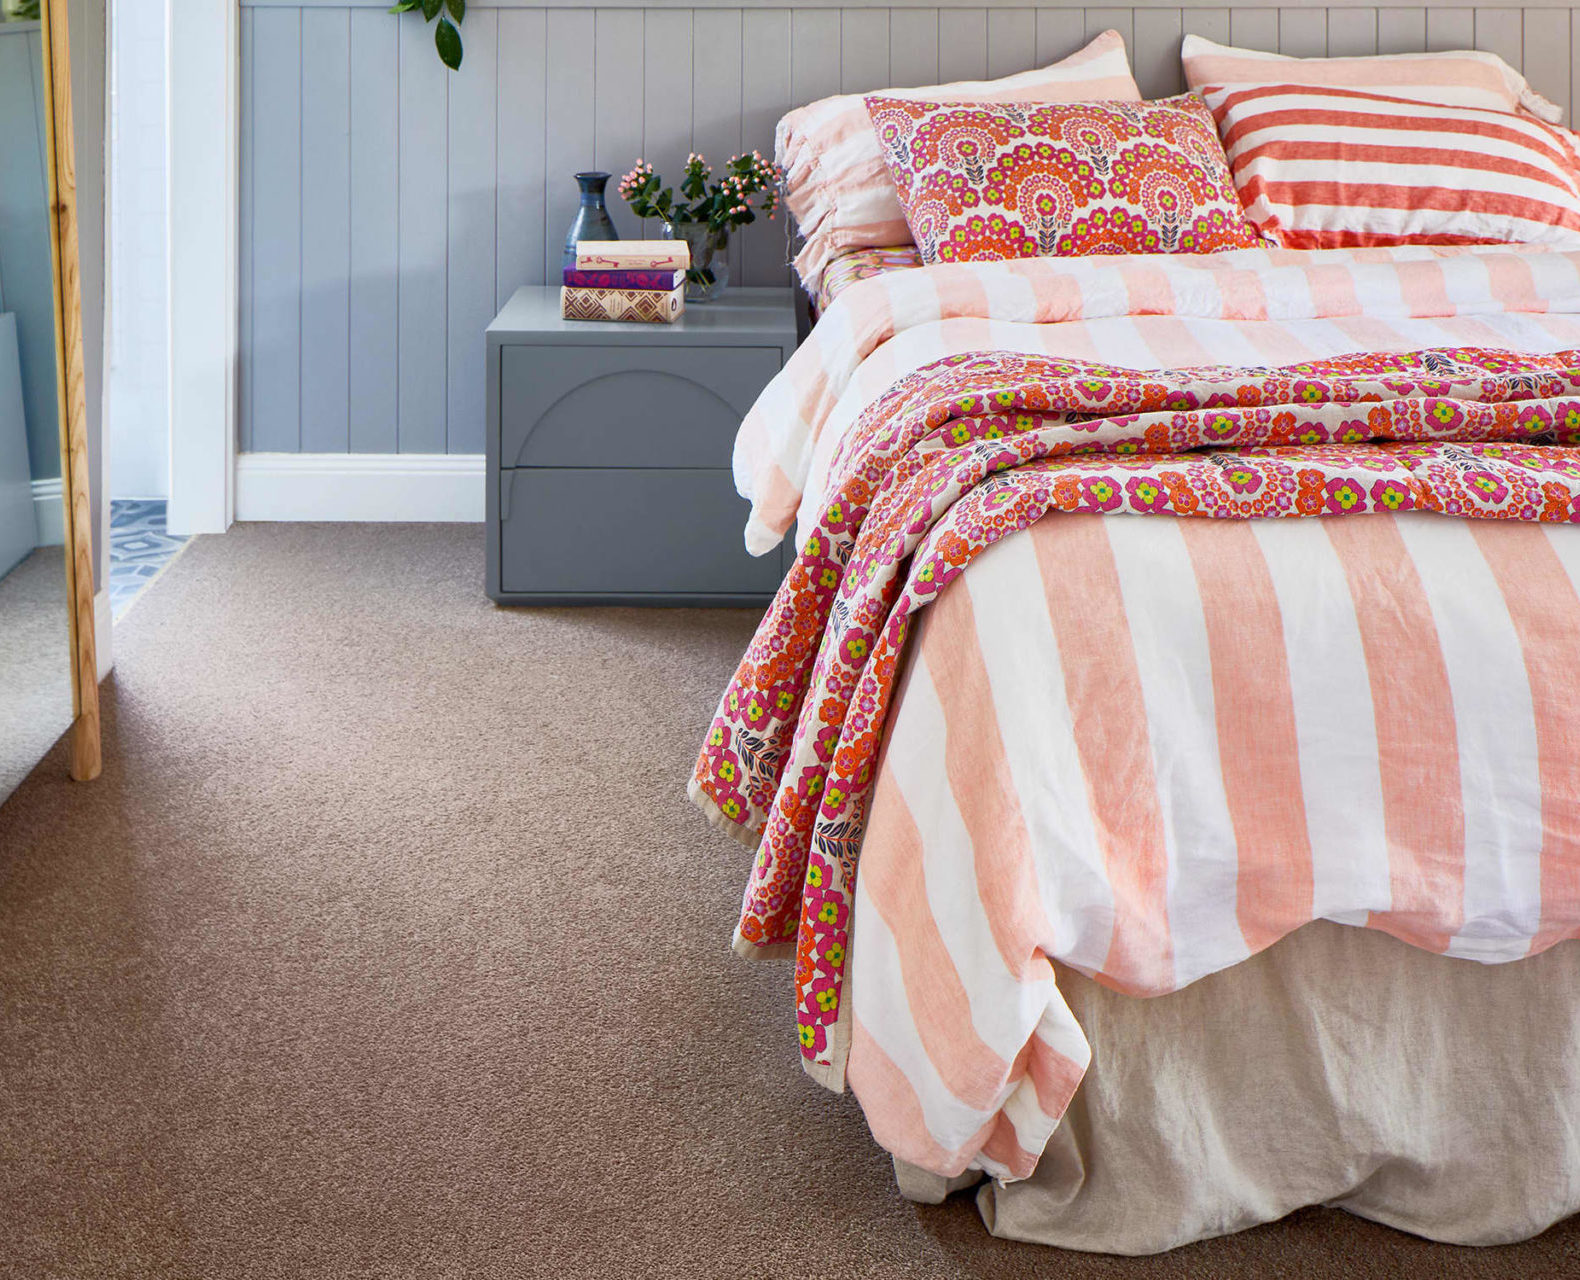 Hero image of carpet in a bedroom.